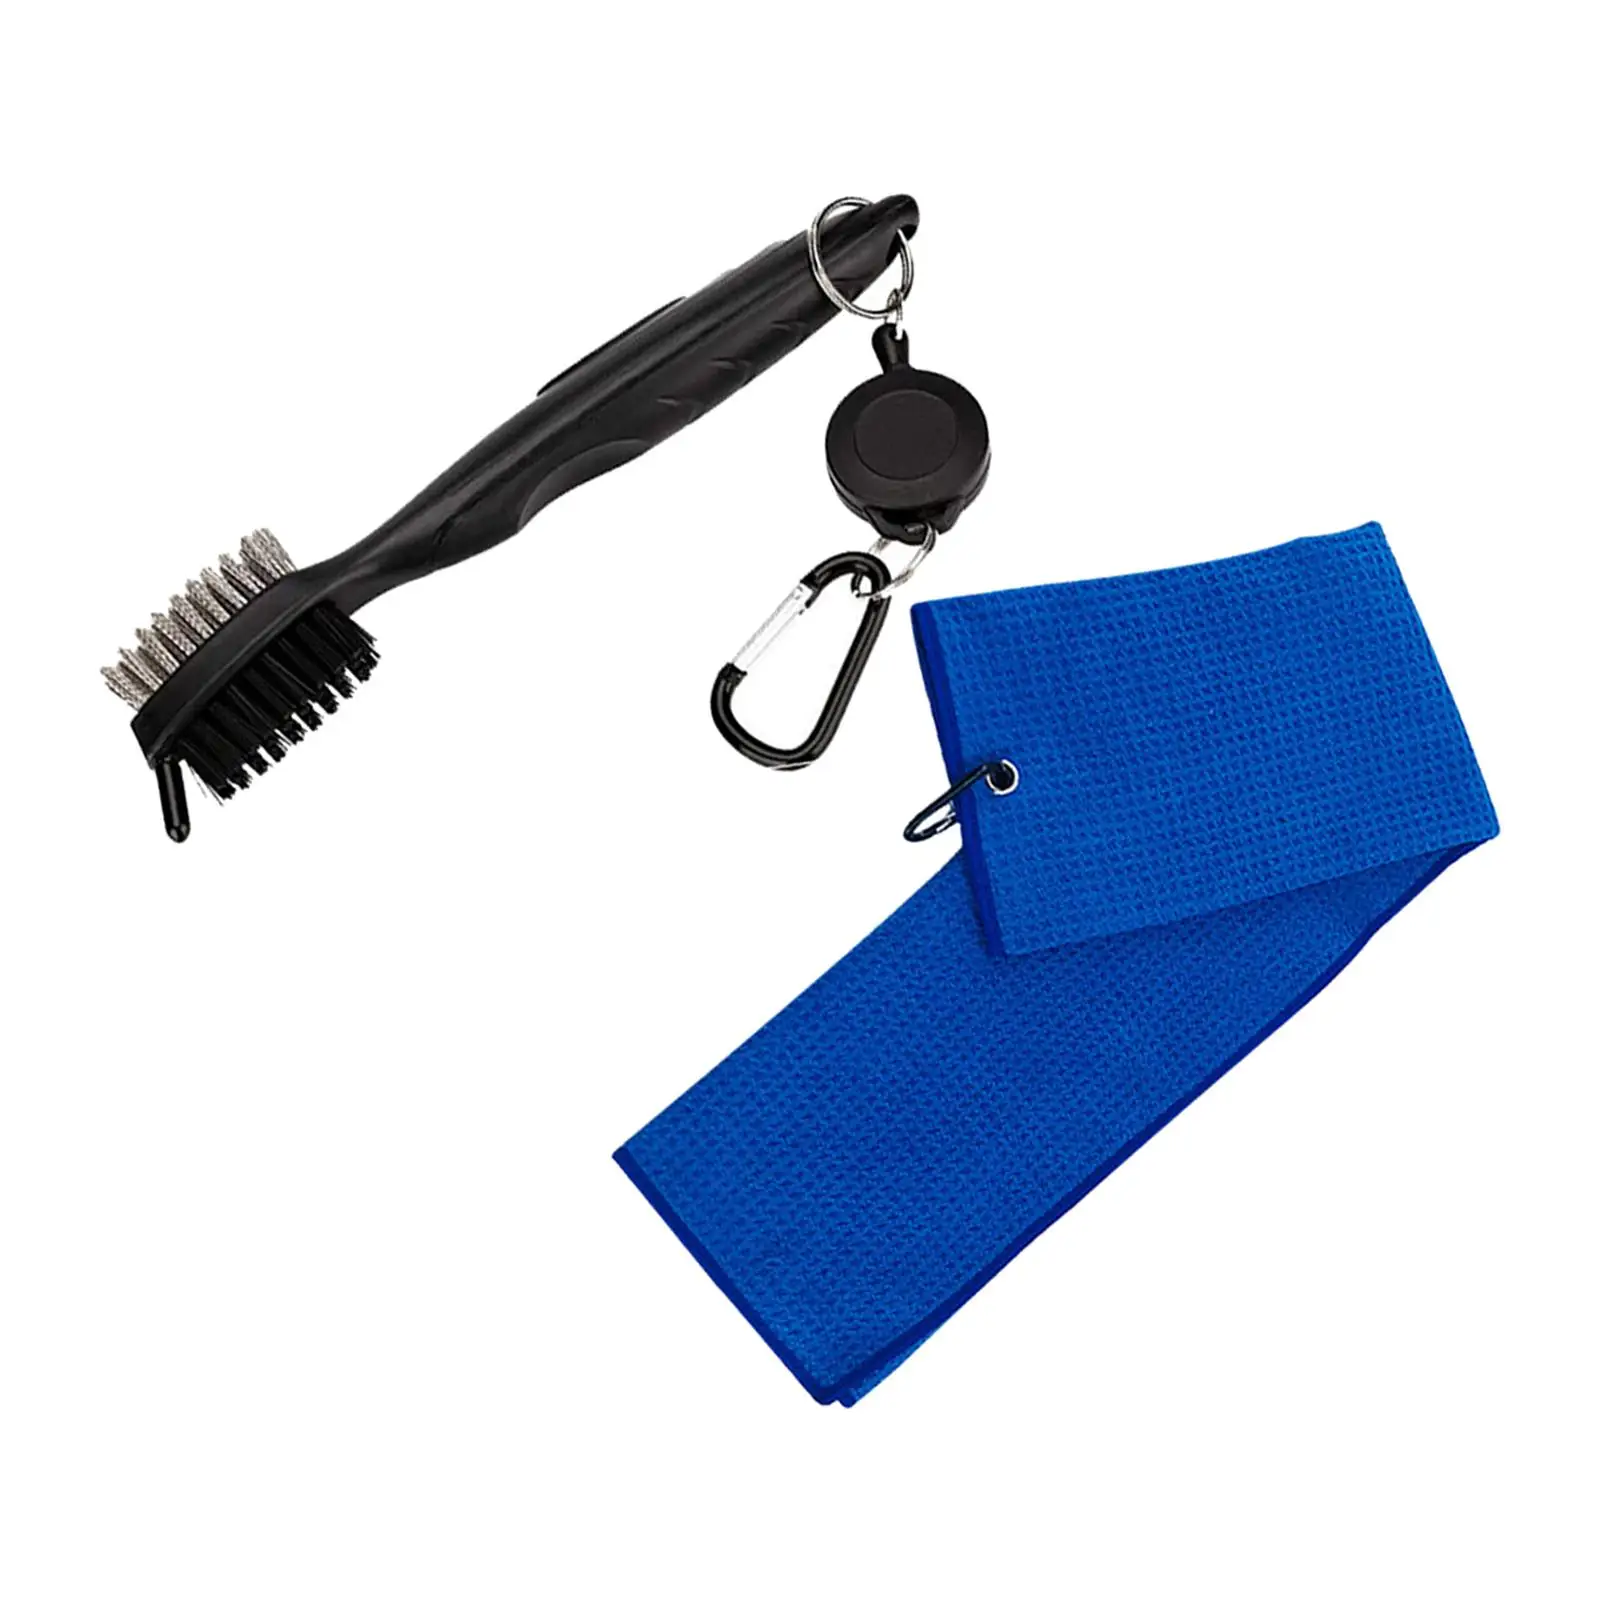 40x60cm Golf Towels Cleaner Brush with Carabiner Clip Golfer Gift for Men